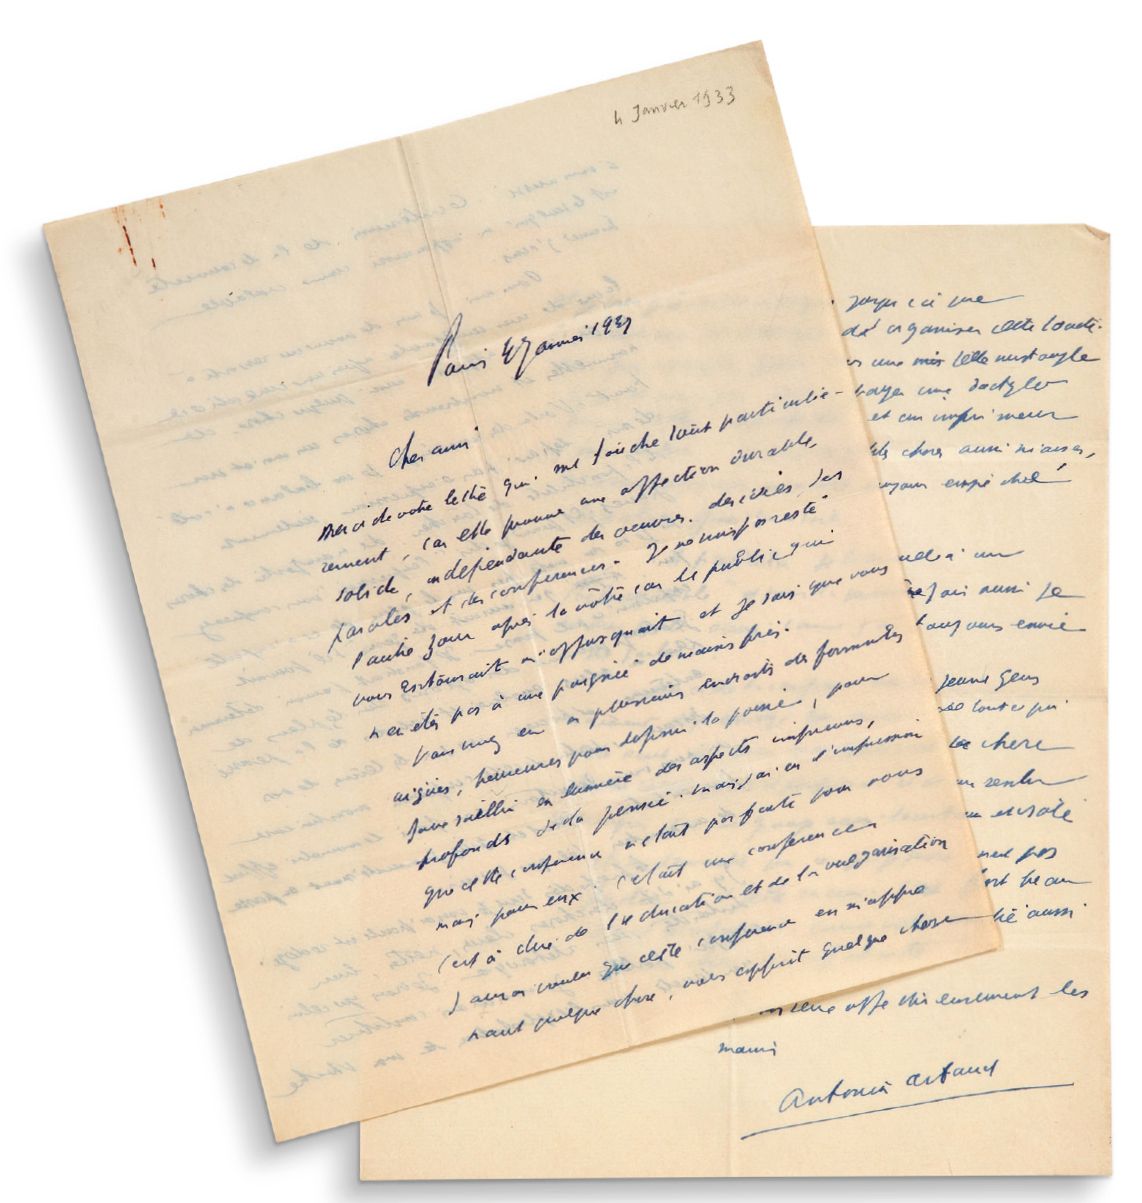 ARTAUD ANTONIN (1896-1948) Autograph letter signed by Antonin Artaud to André RO&hellip;